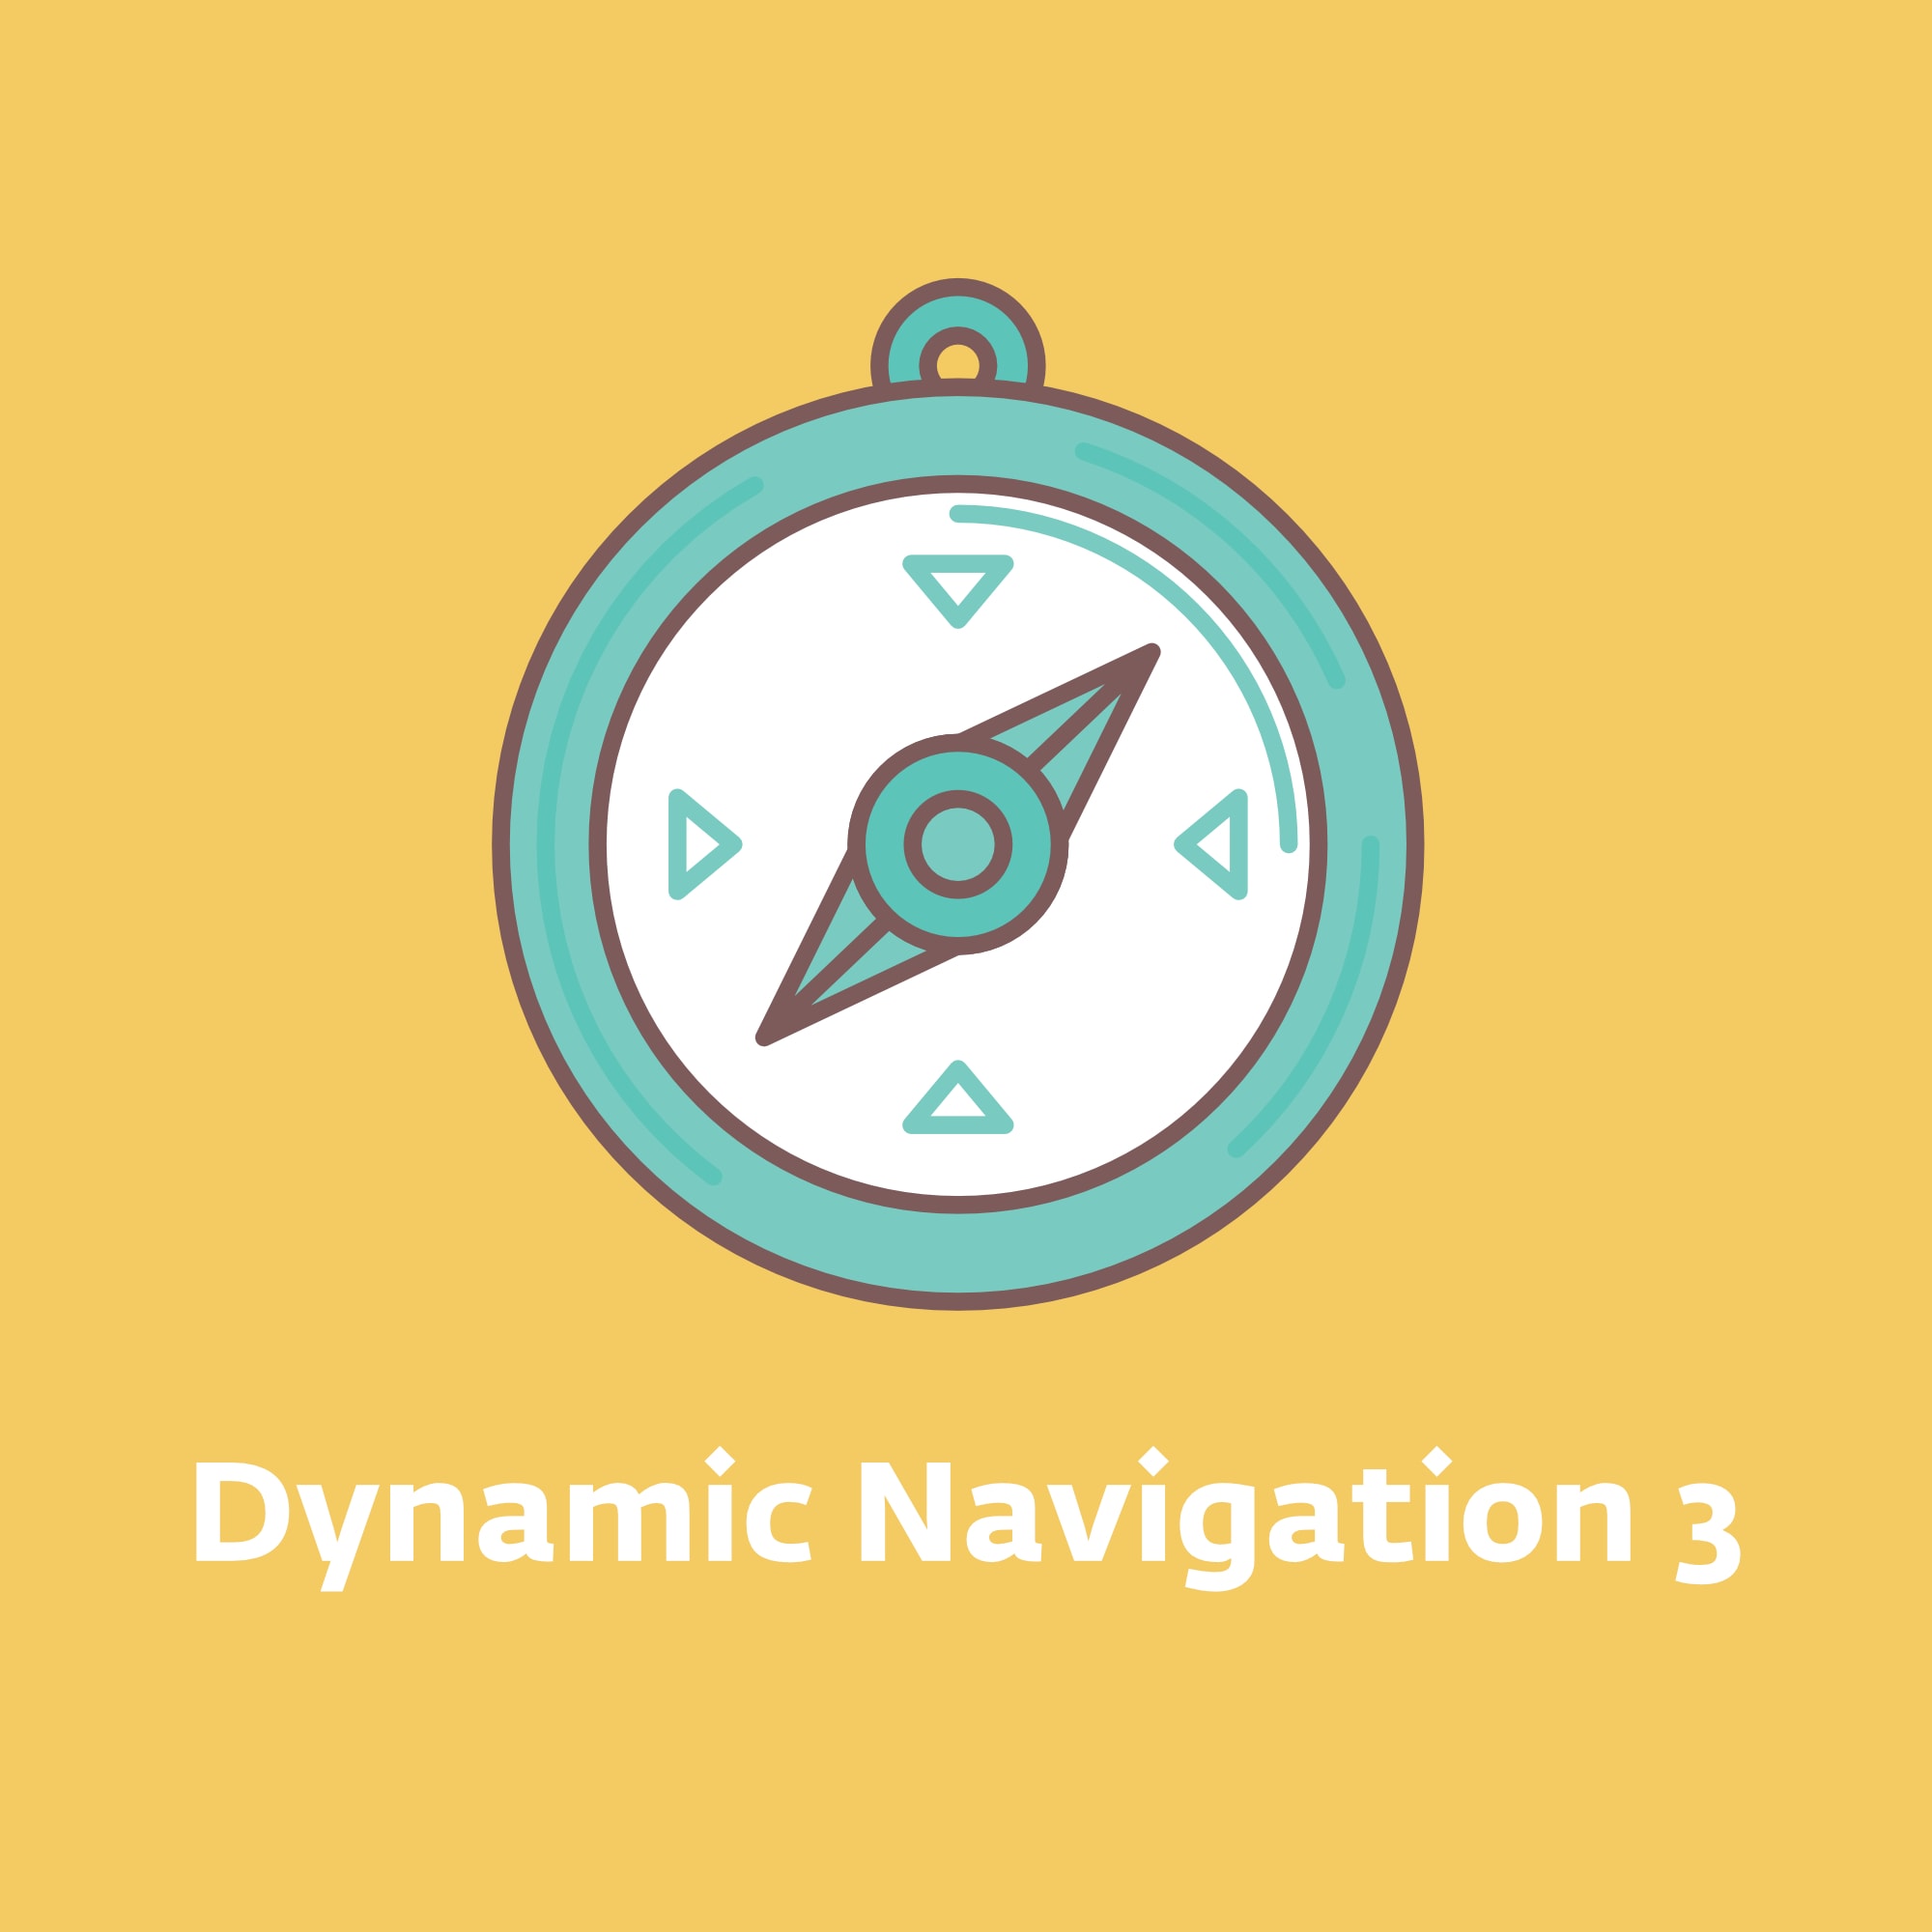 Dynamic Navigation 3